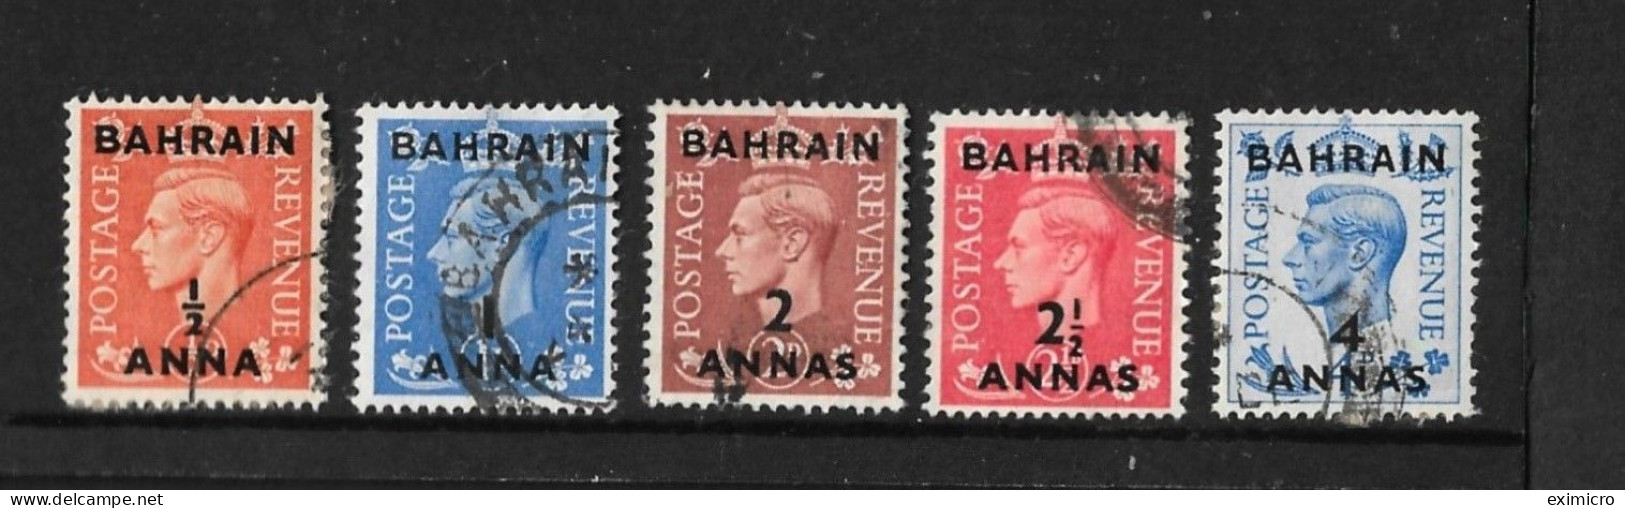 BAHRAIN 1950 - 1955 VALUES TO 4a On 4d SG 71,72,74,75,76 FINE USED Cat £30 - Bahrain (...-1965)